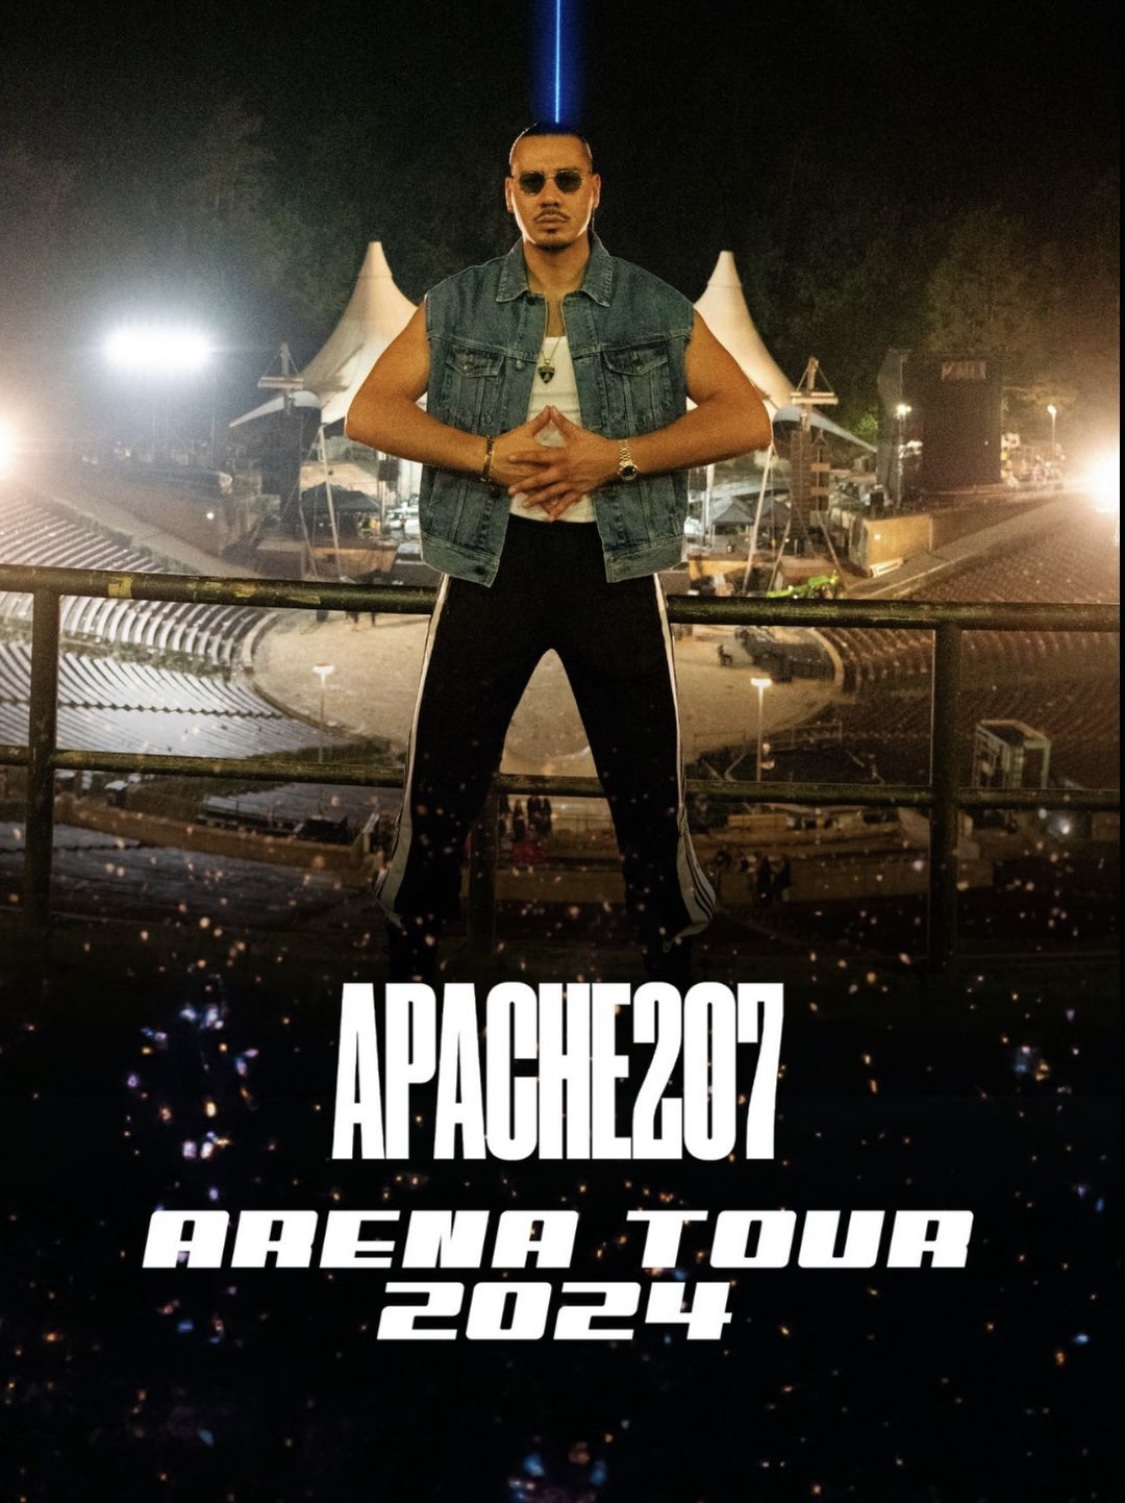 apache stadion tour